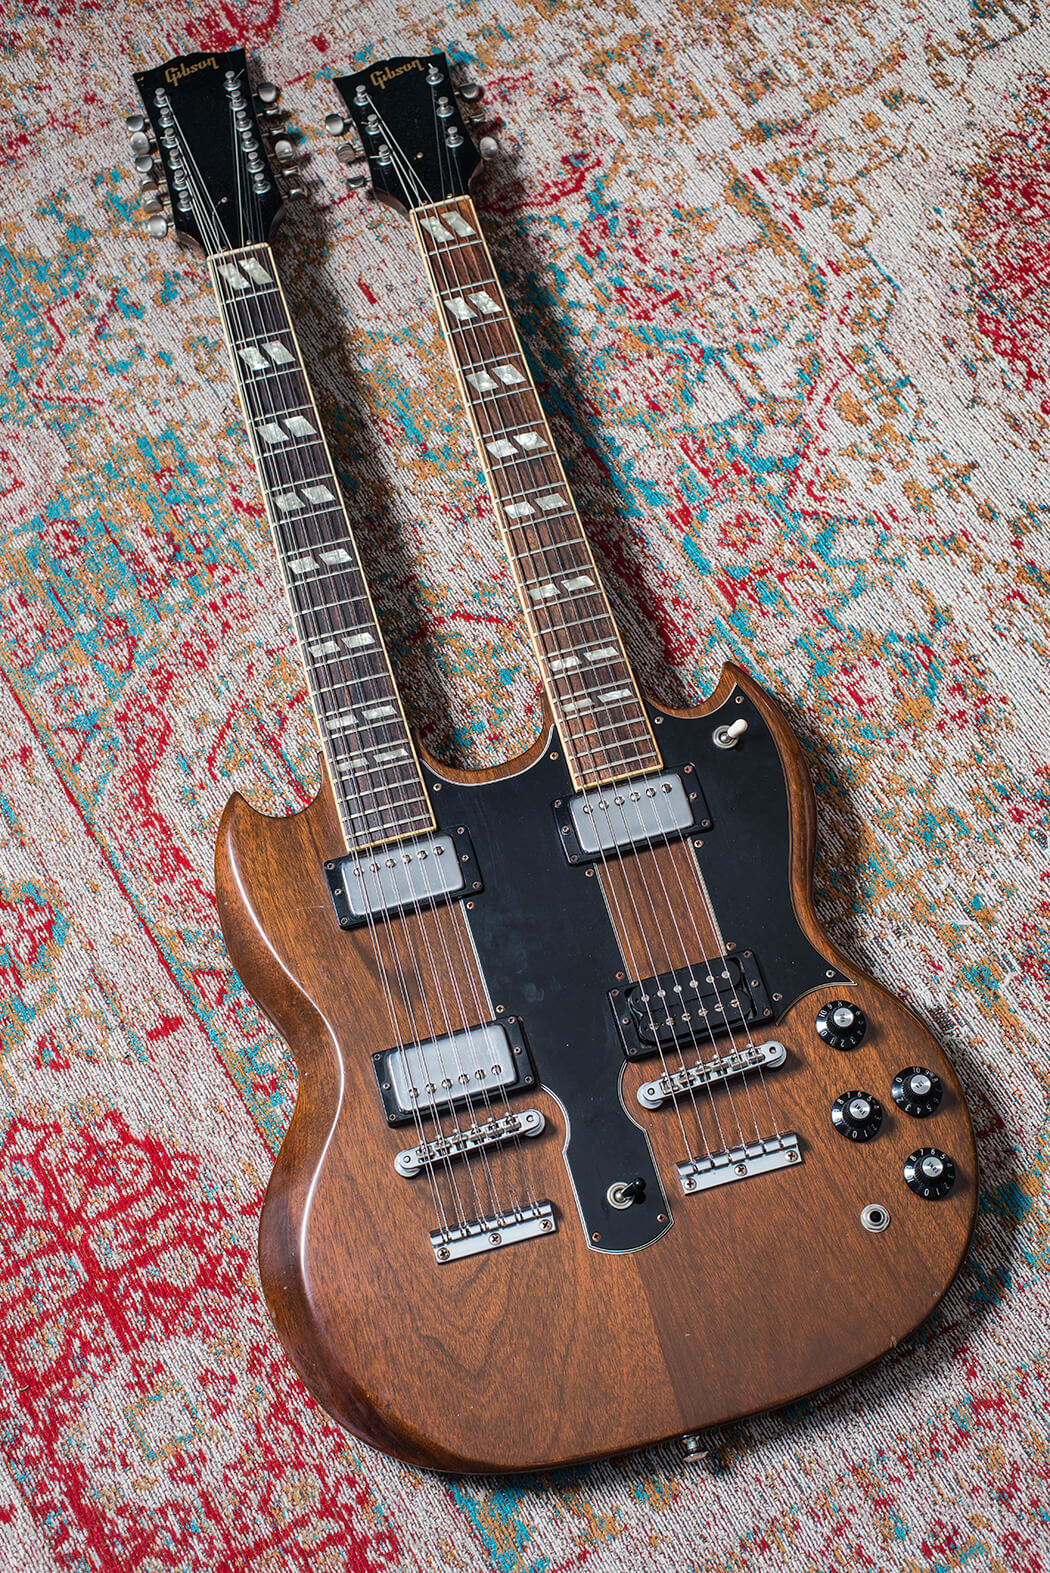 Scott holiday's Gibson EDS-1275 doubleneck